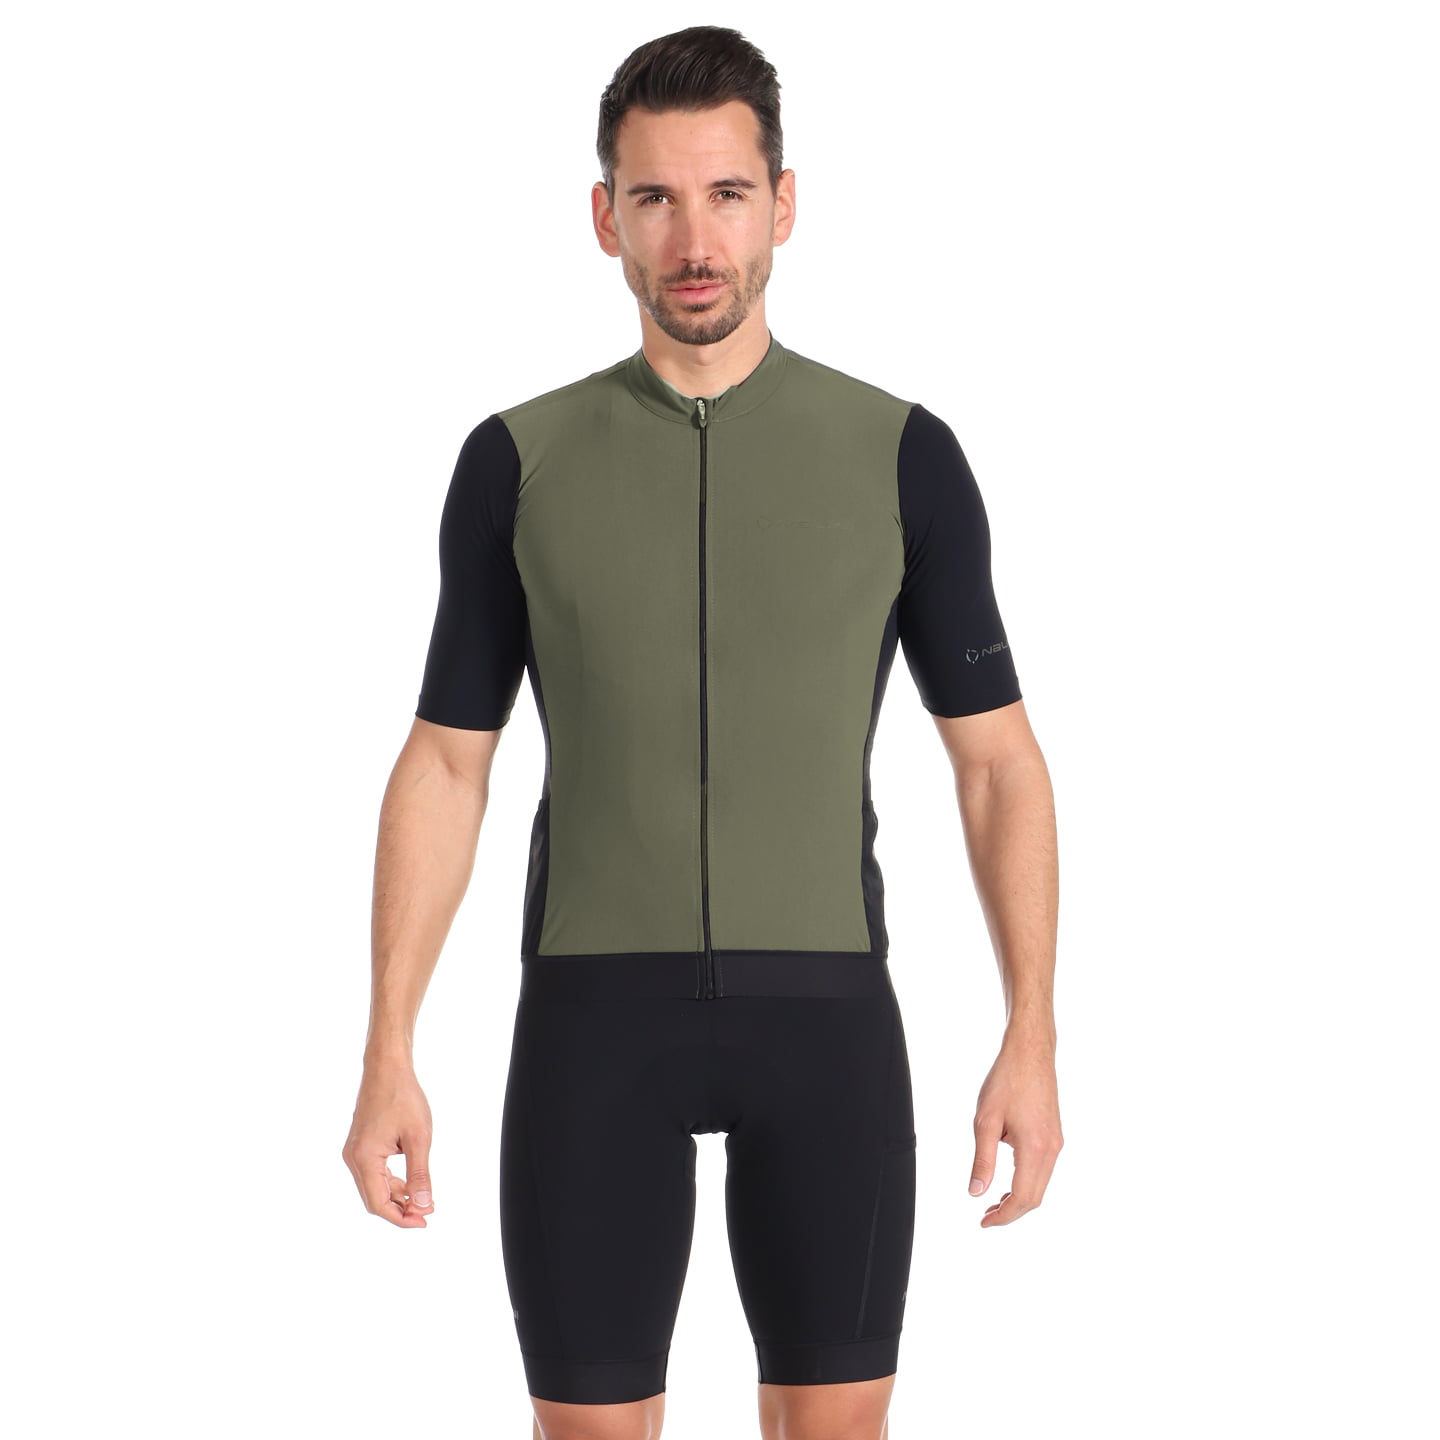 NALINI New Sun Block Set (cycling jersey + cycling shorts) Set (2 pieces), for men